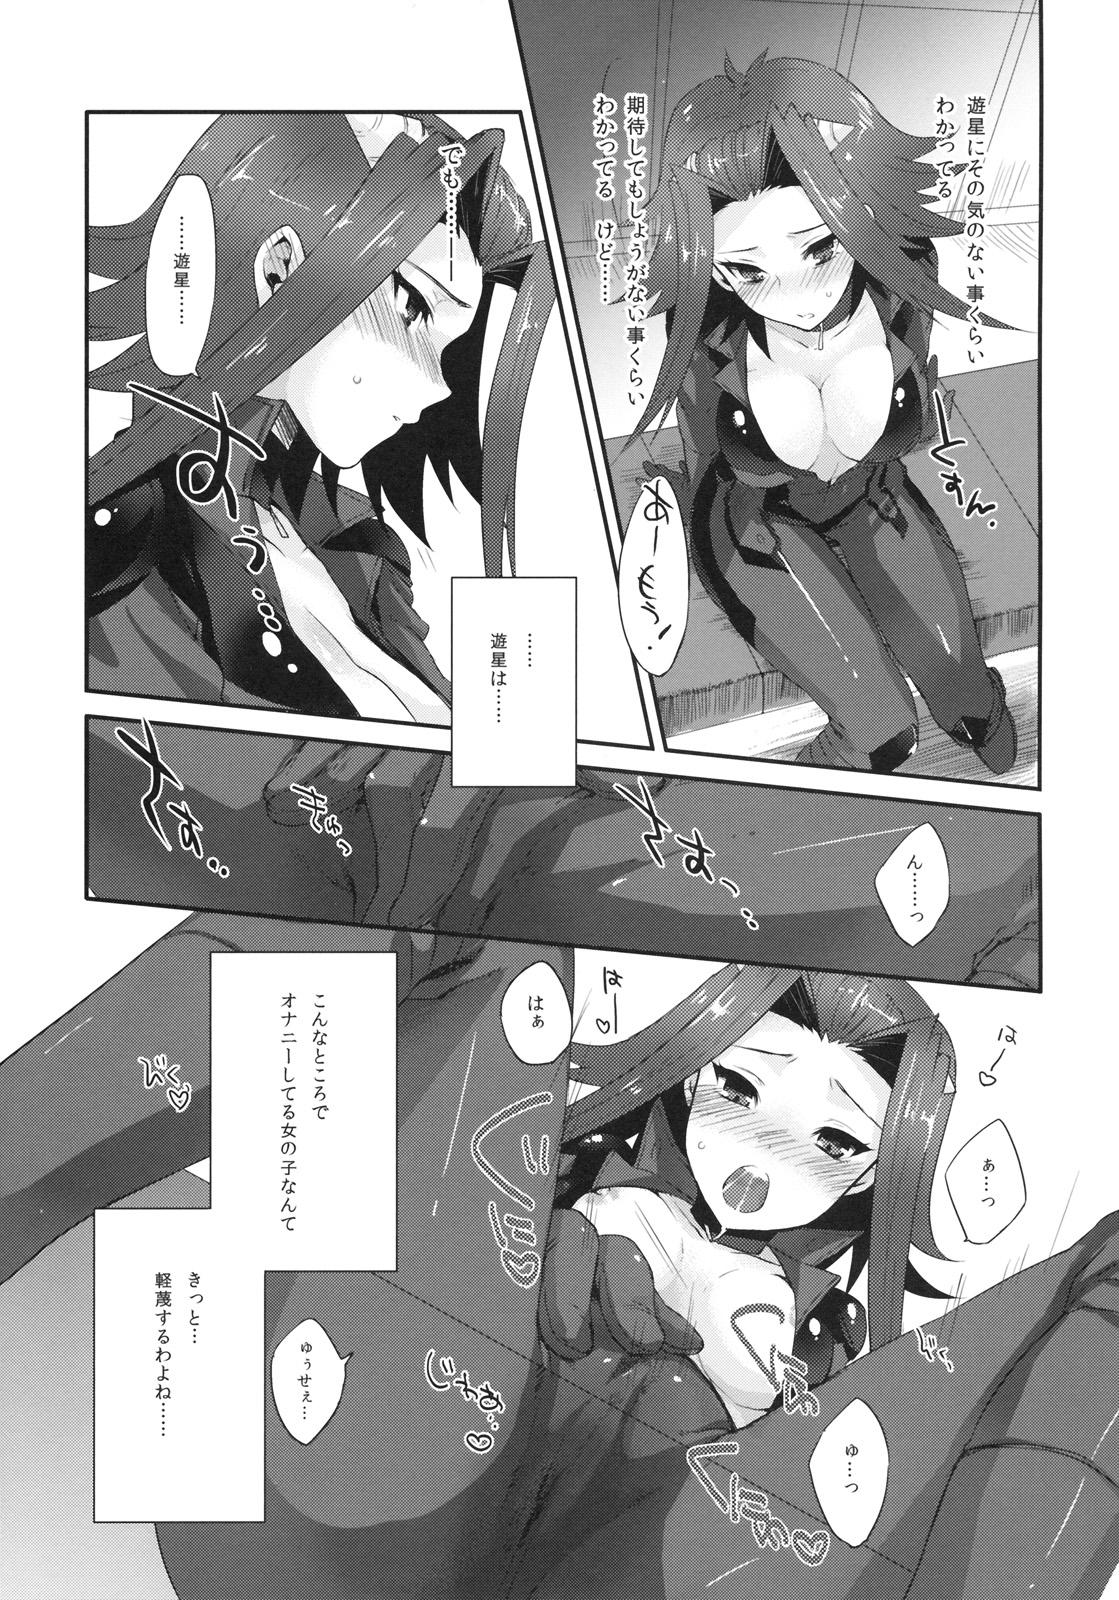 Threesome Izayoi Emotion - Yu gi oh 5ds Pinay - Page 4